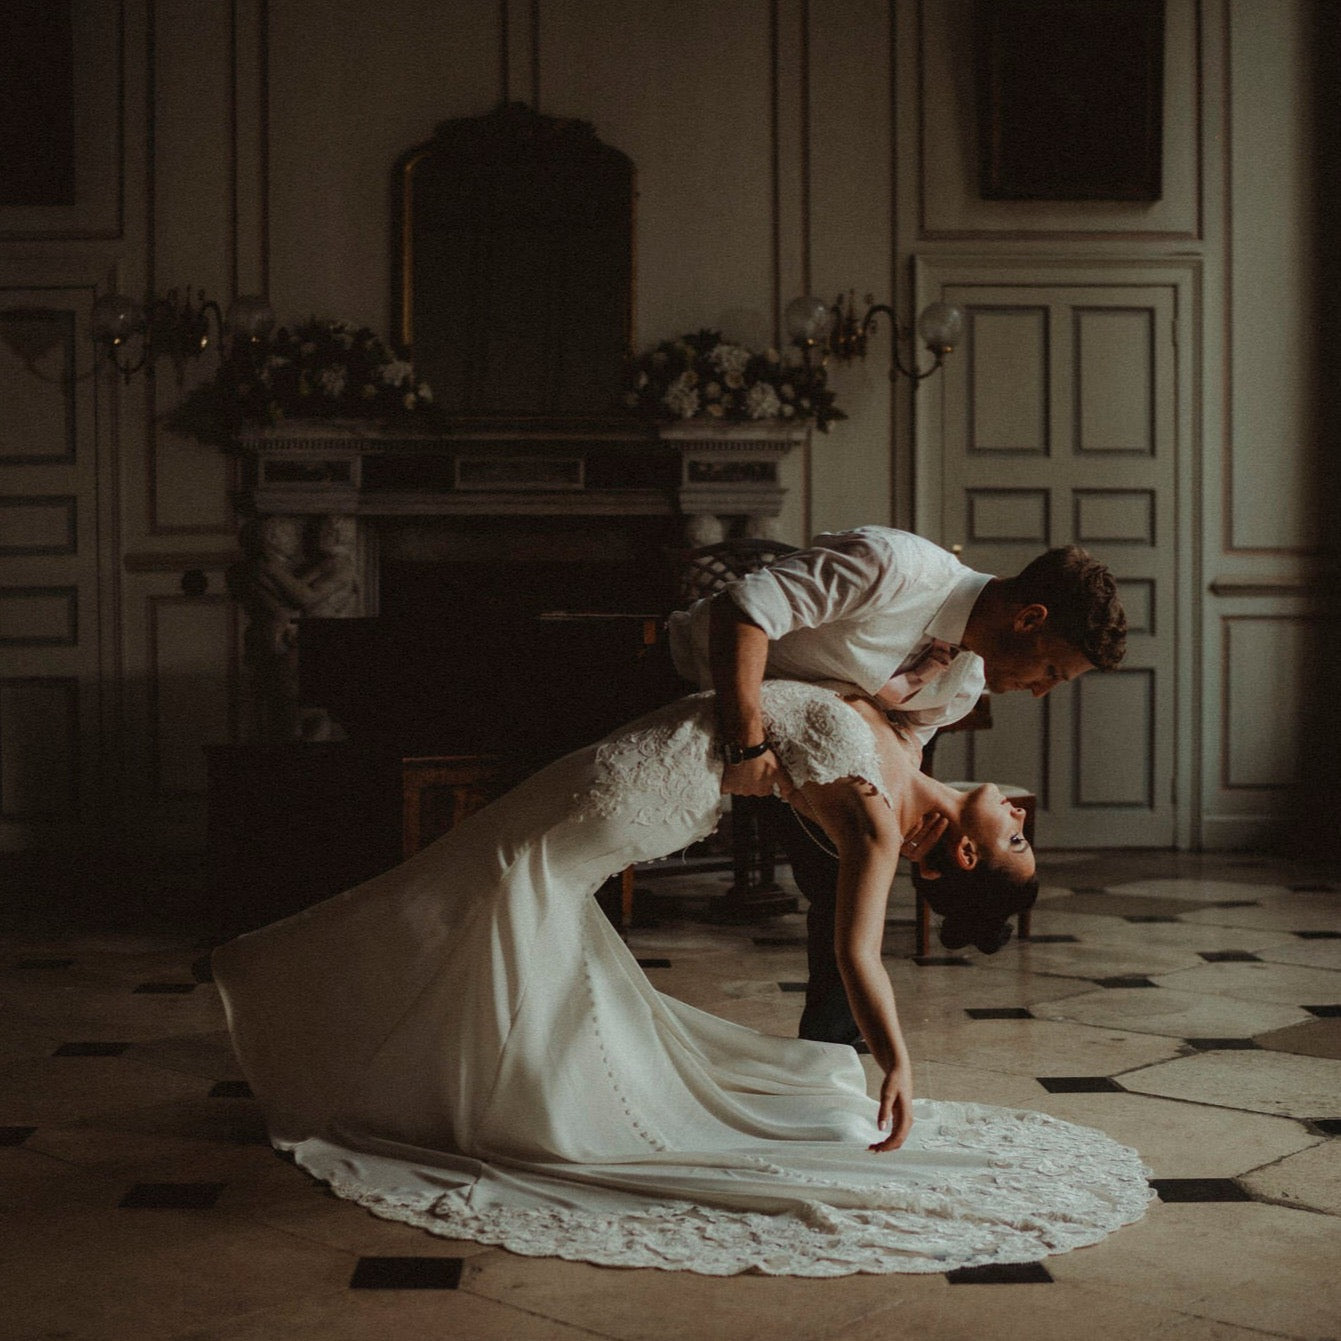 Shoot a wedding with us | Honiton - Photo & Cinema